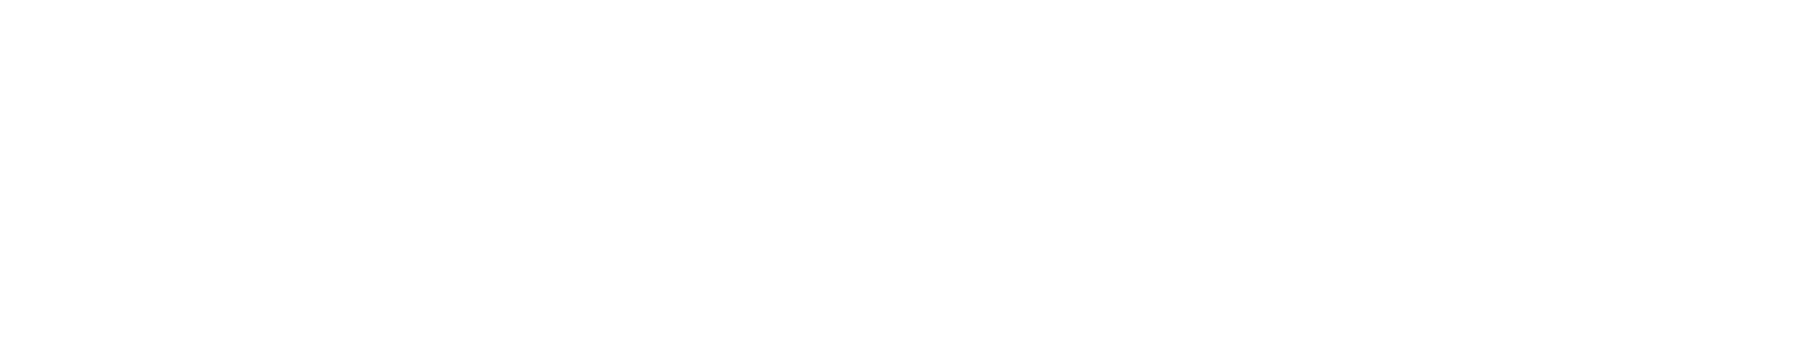 Woocommerce Ecommerce Solution for WordPress